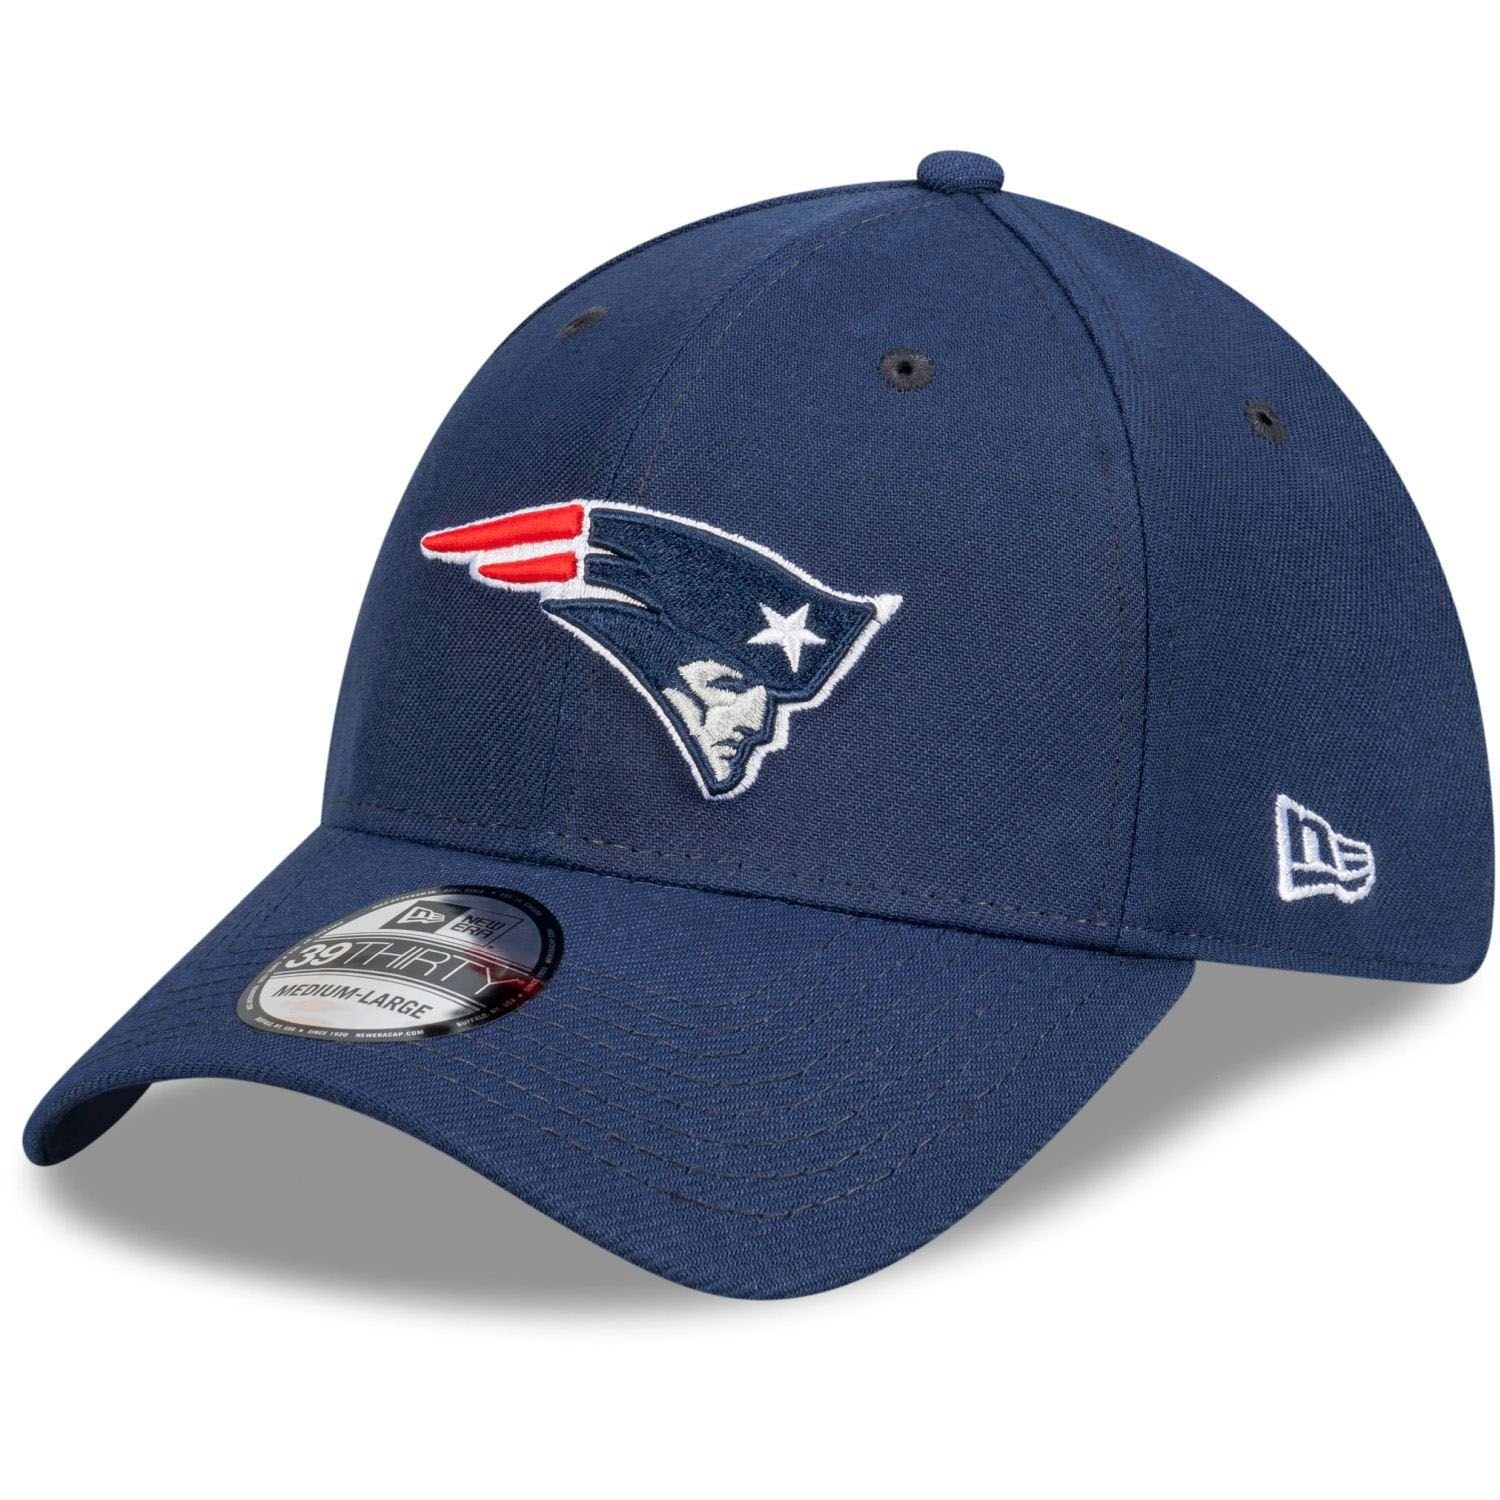 New Era Flex Cap 39Thirty StretchFit NFL Teams New England Patriots